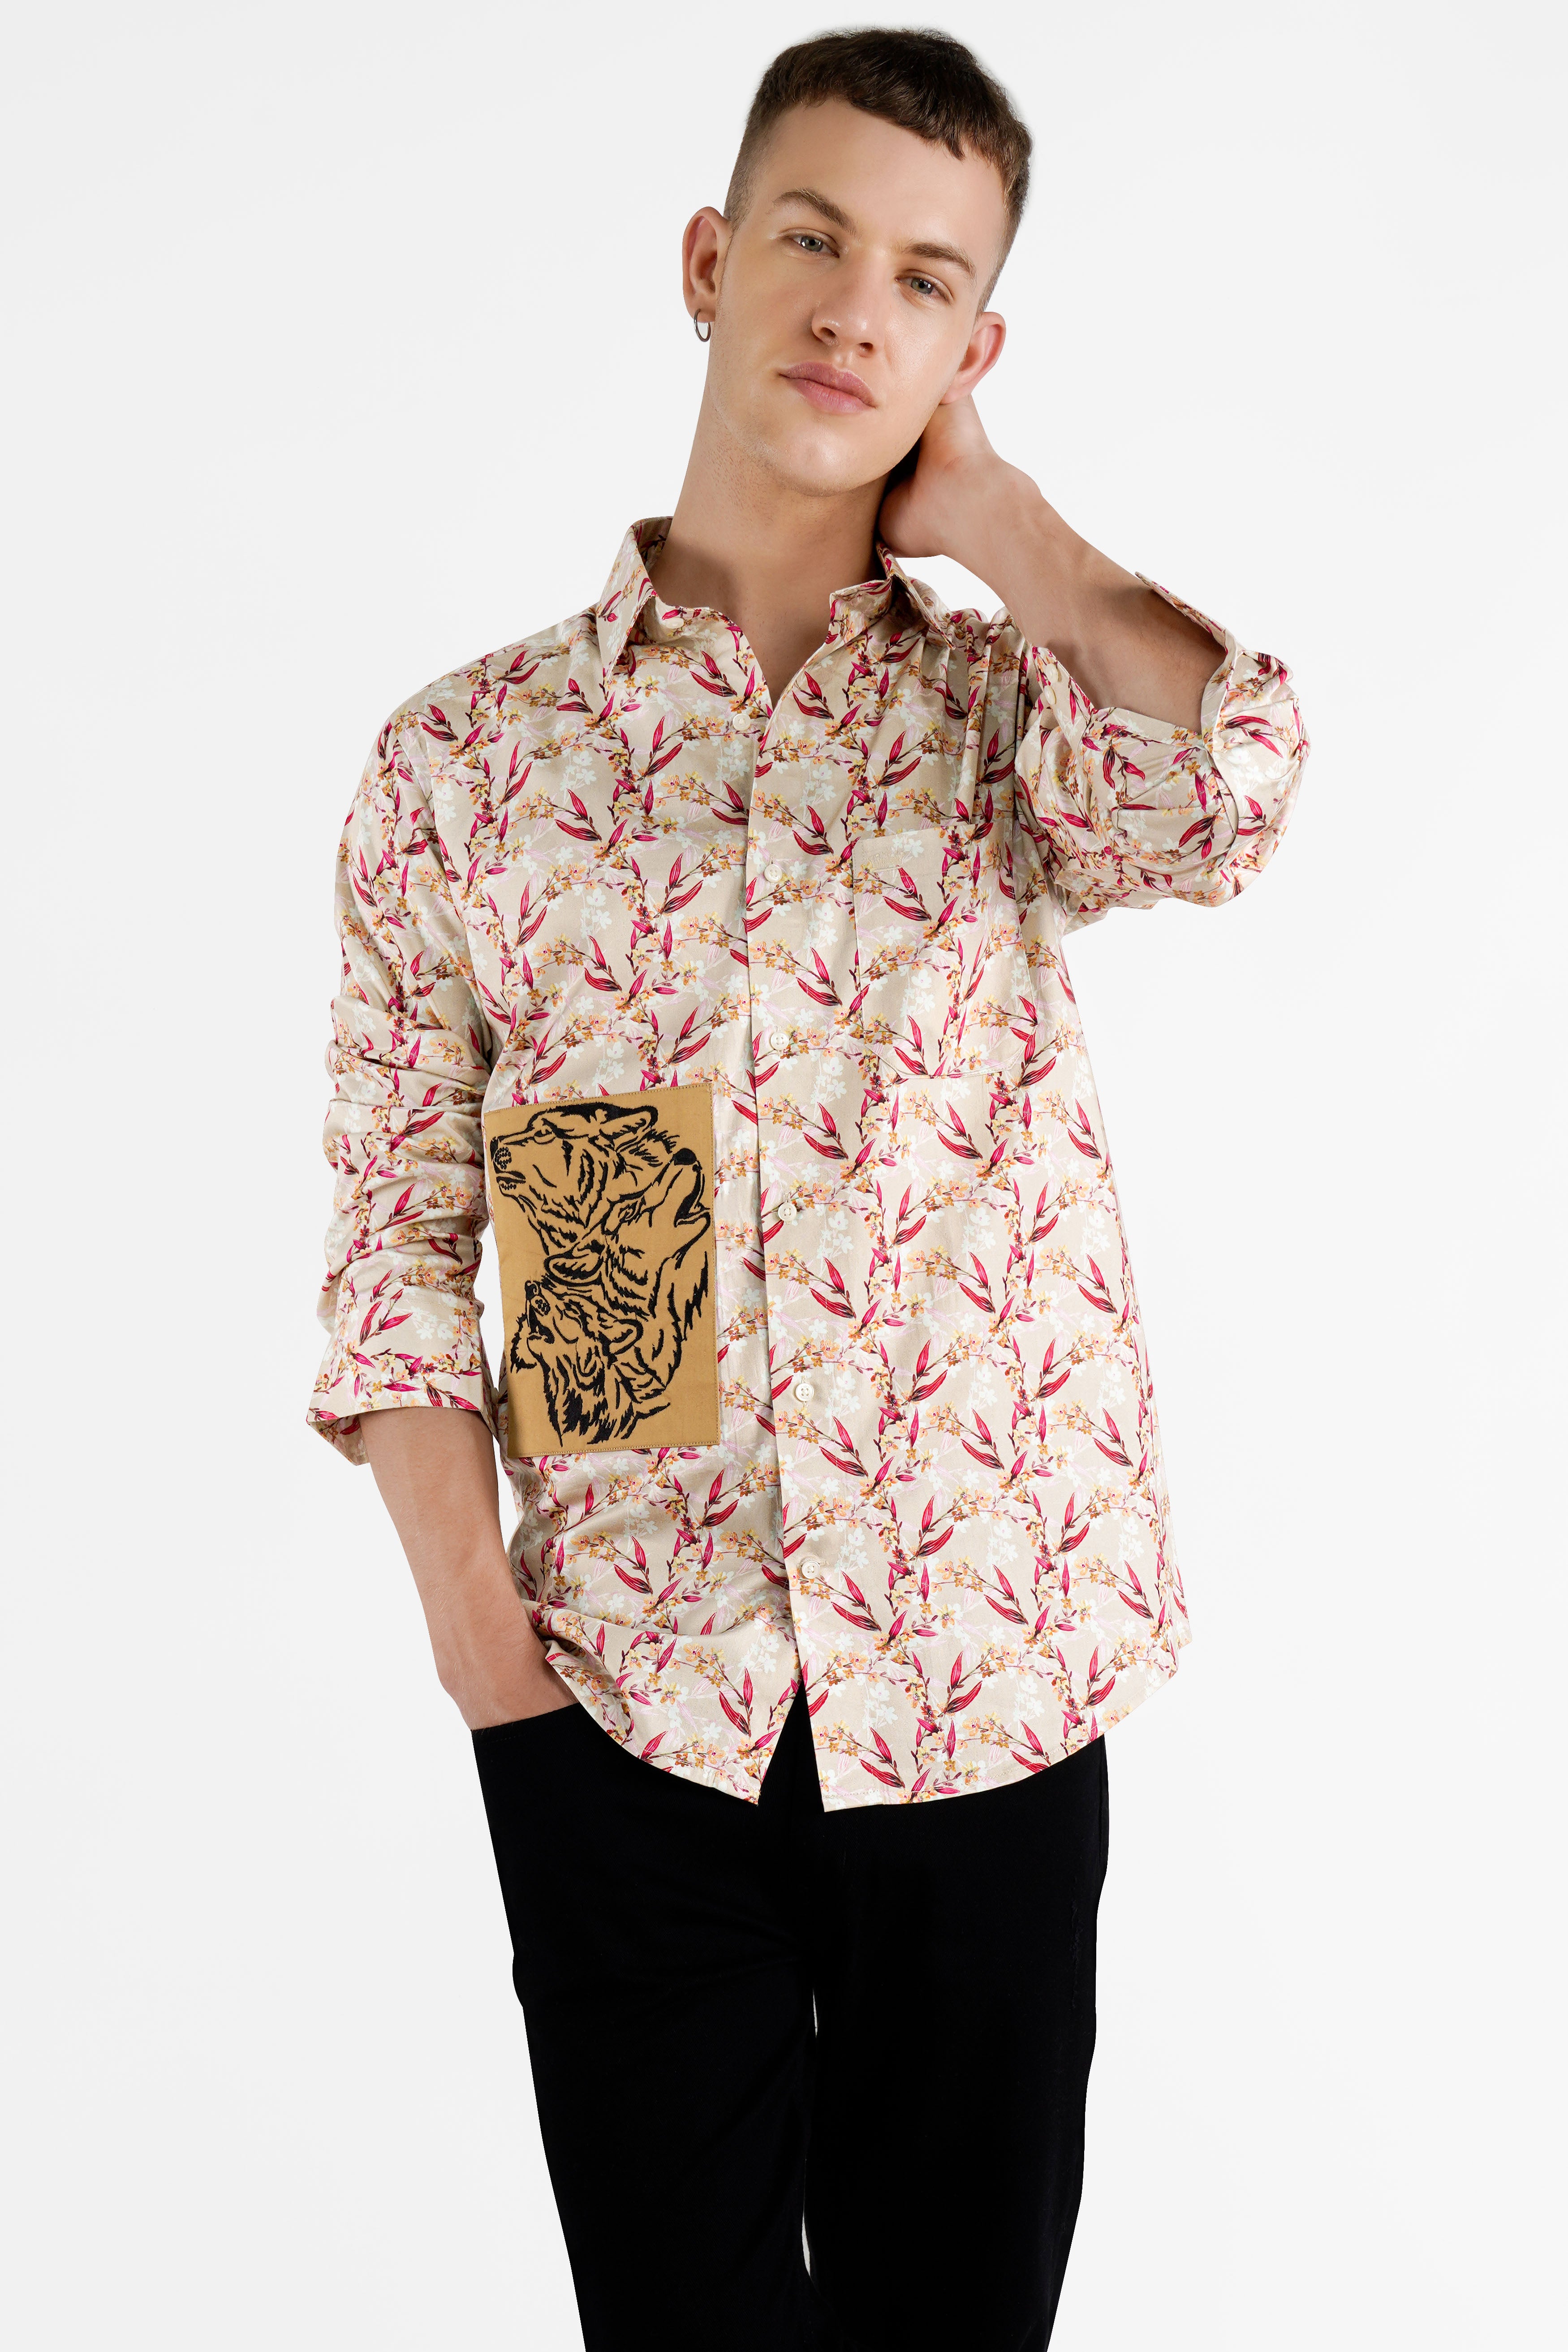 Bone Beige Leaves Printed with Dogs Patch Work Super Soft Premium Cotton Designer Shirt